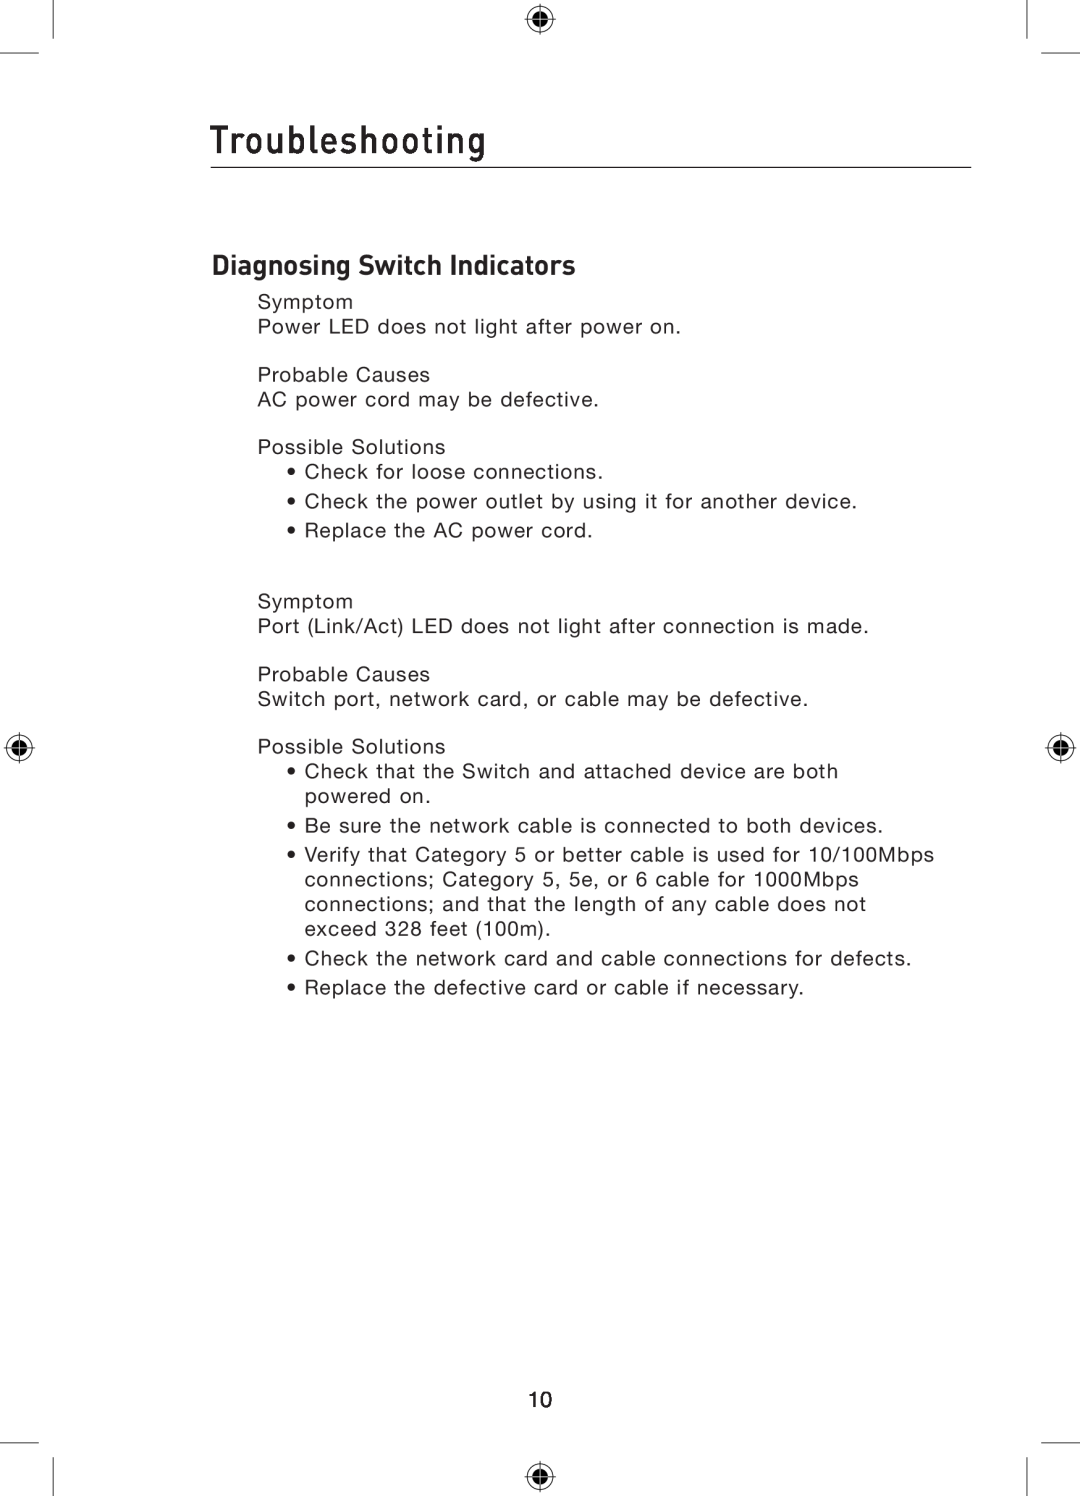 Belkin P75179ea manual Troubleshooting, Diagnosing Switch Indicators 